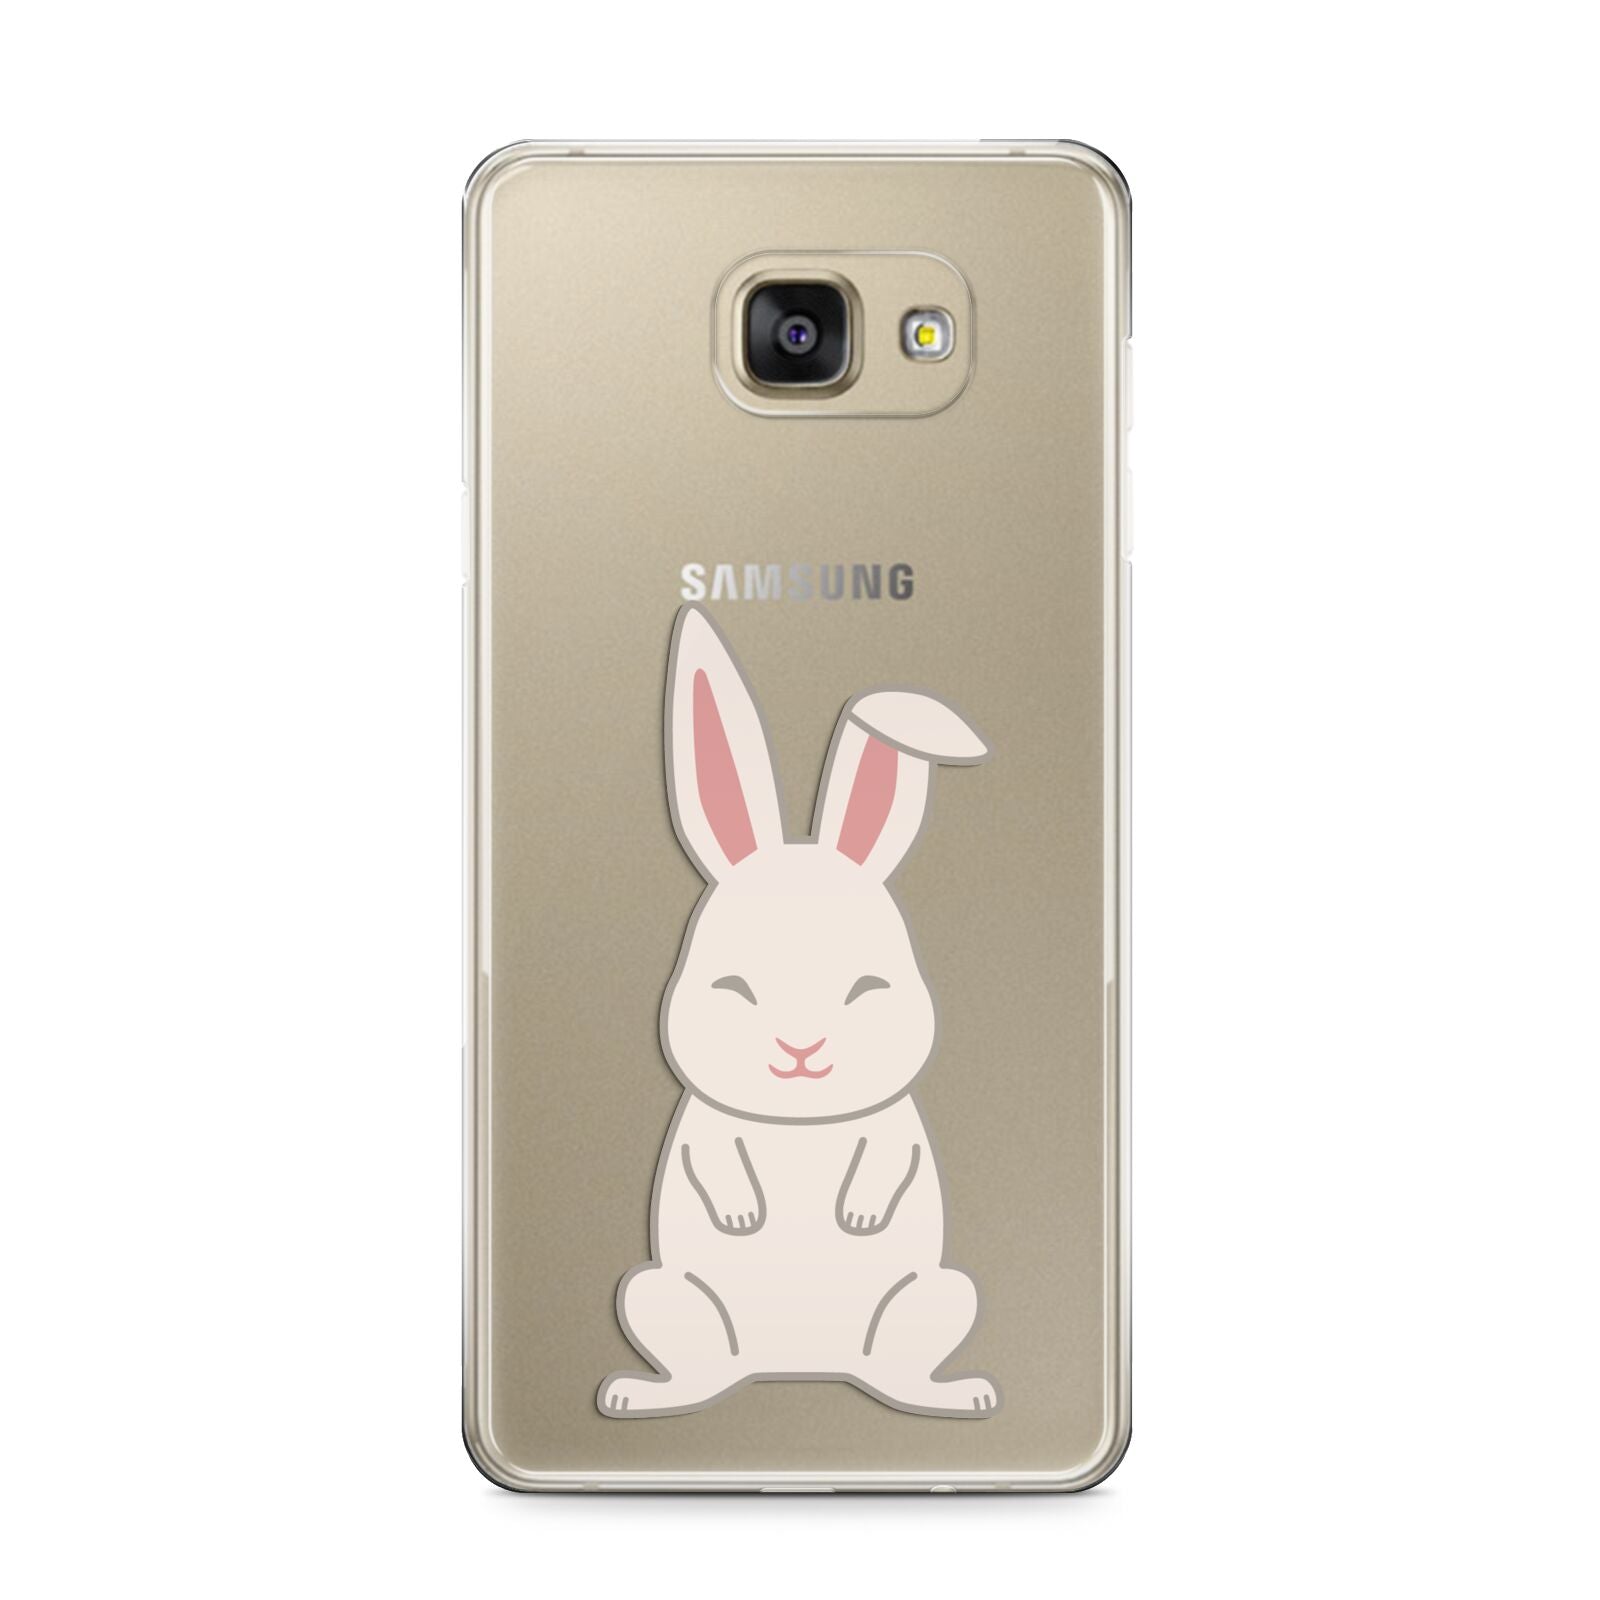 Bunny Samsung Galaxy A9 2016 Case on gold phone